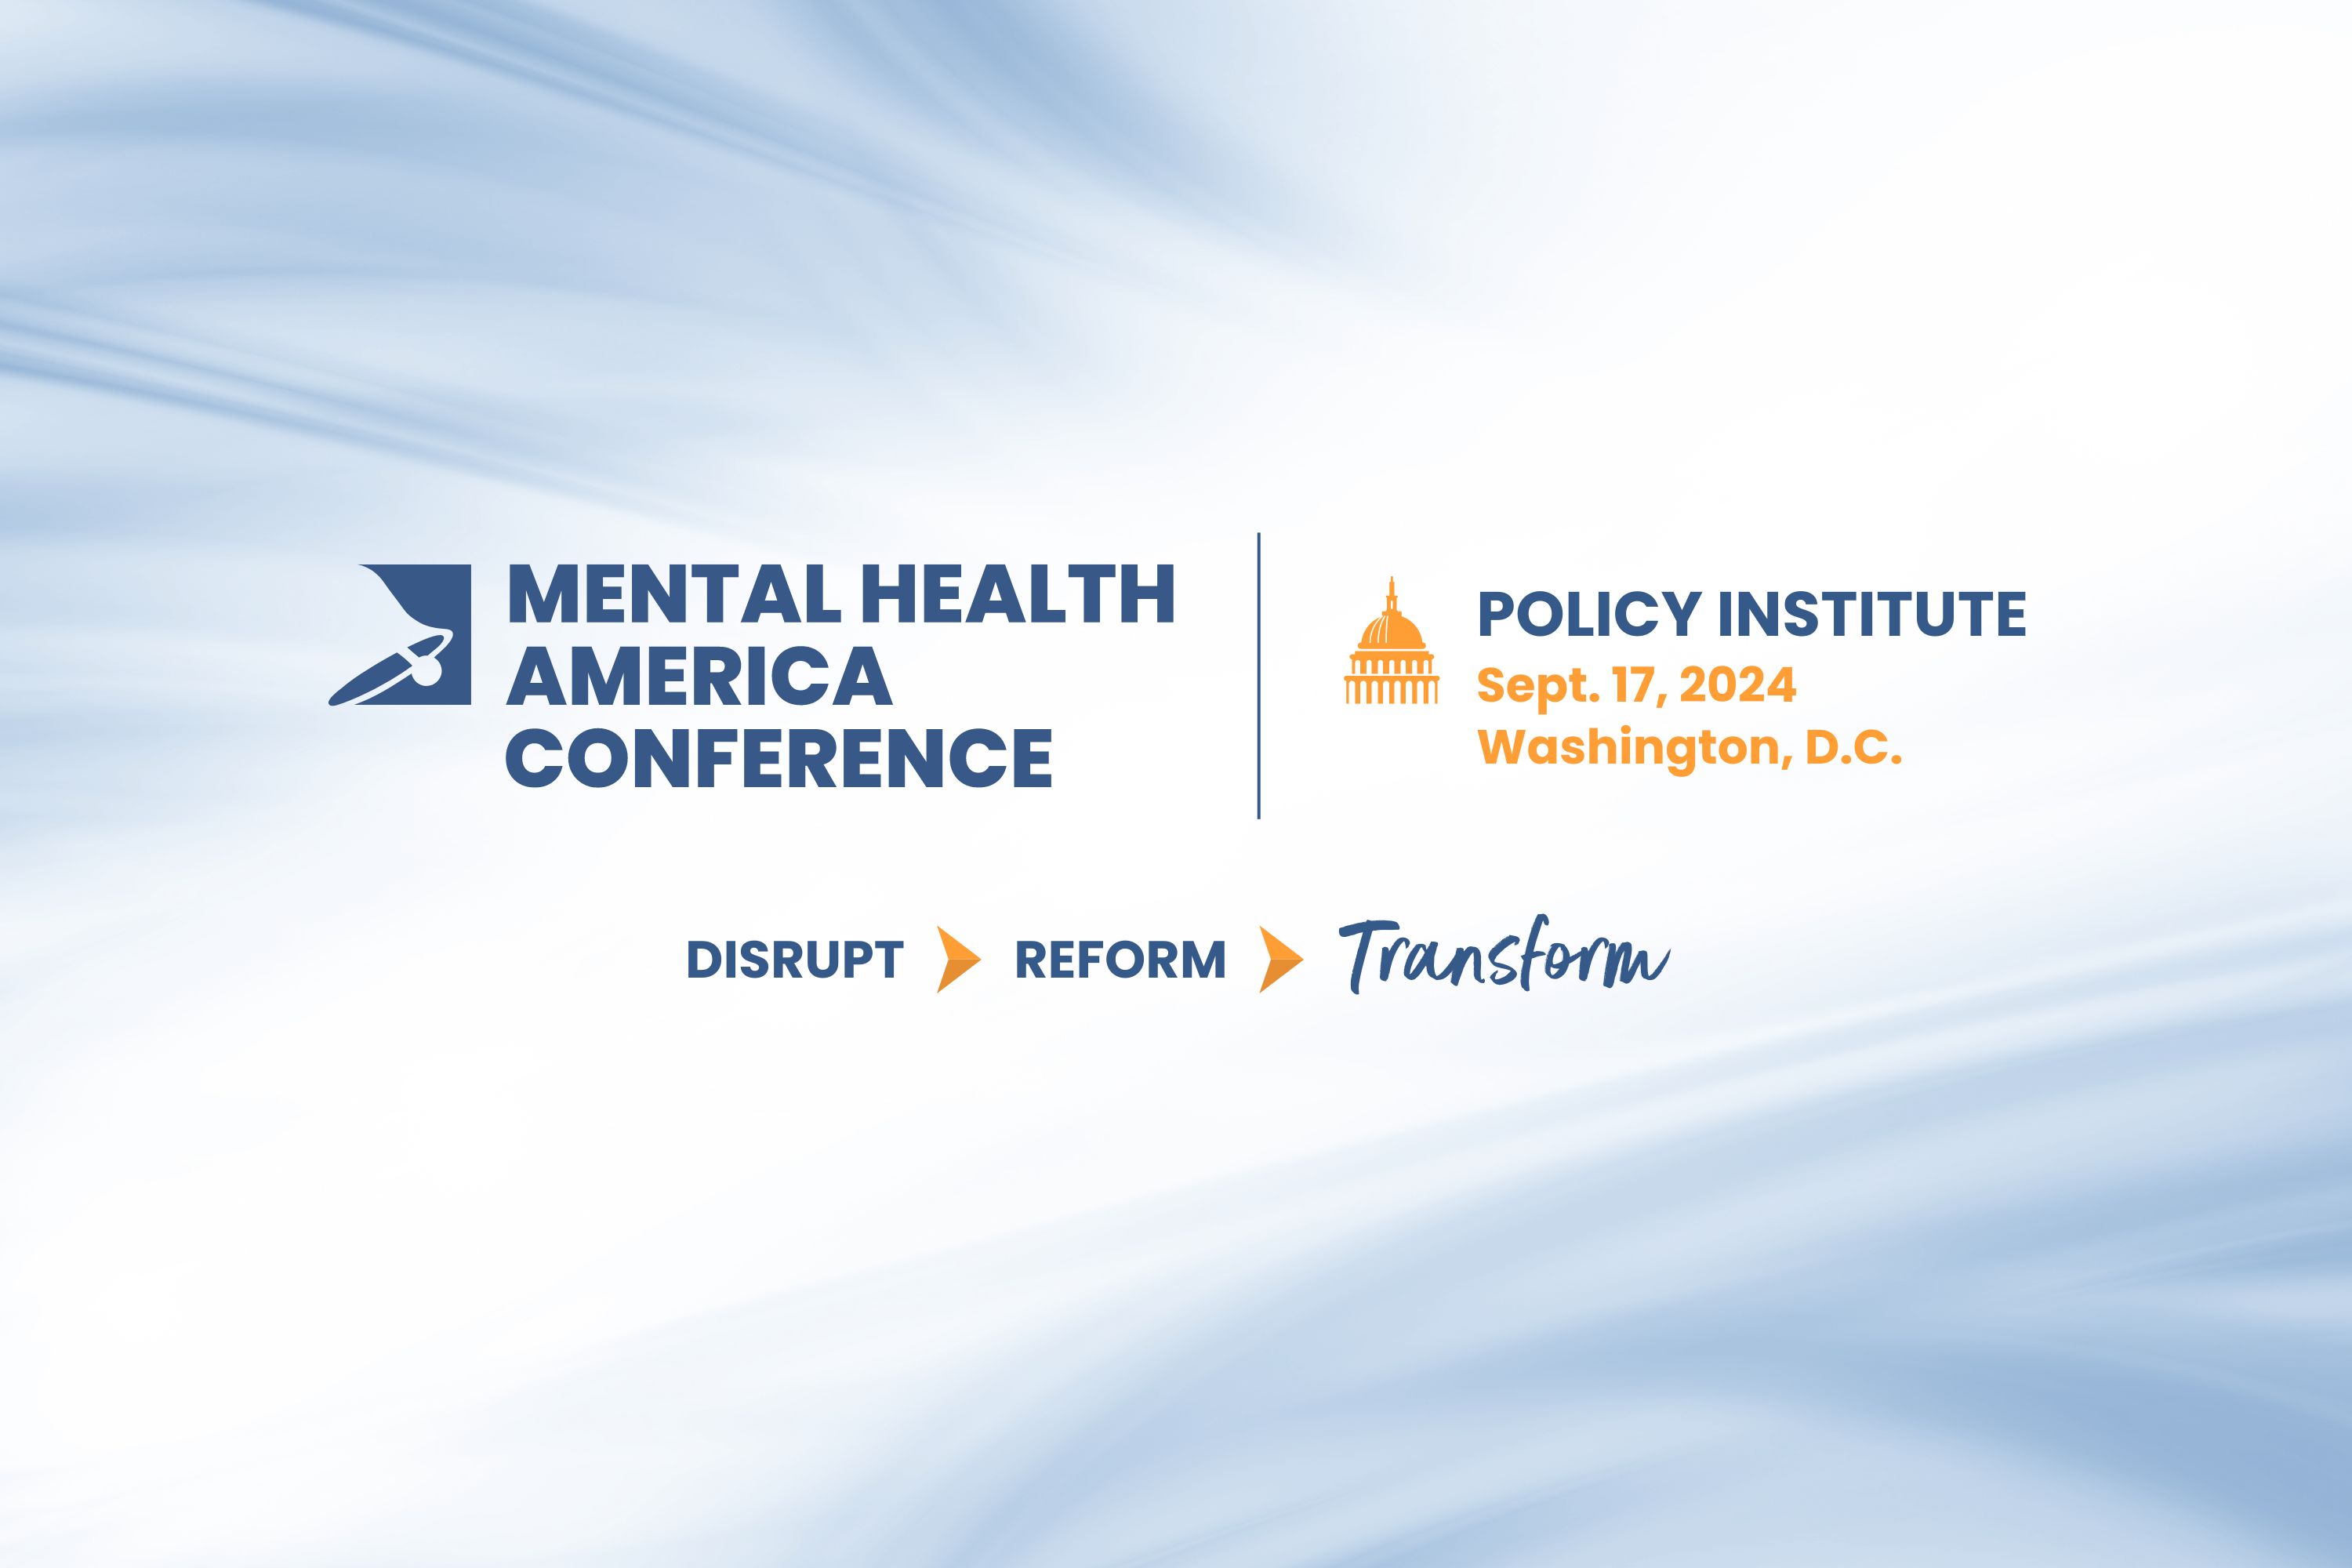 Mental Health America Conference | Policy Institute | Sept. 17, 2024, Washington, D.C. | Disrupt > Reform > Transform